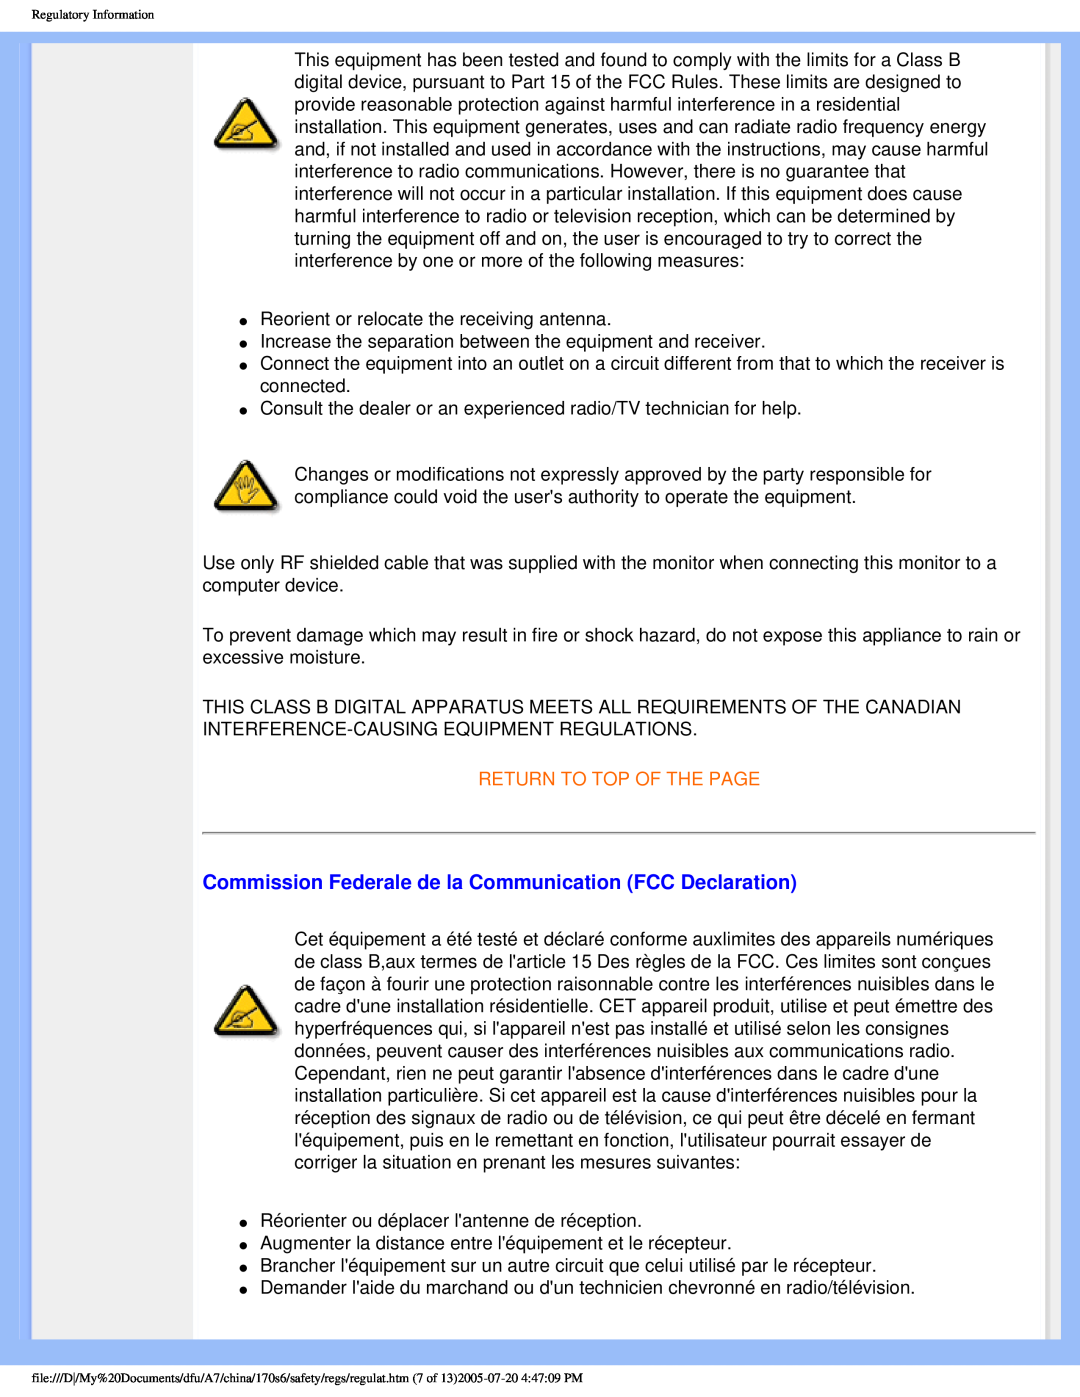 Philips 170s6 user manual Commission Federale de la Communication FCC Declaration, Return To Top Of The Page 